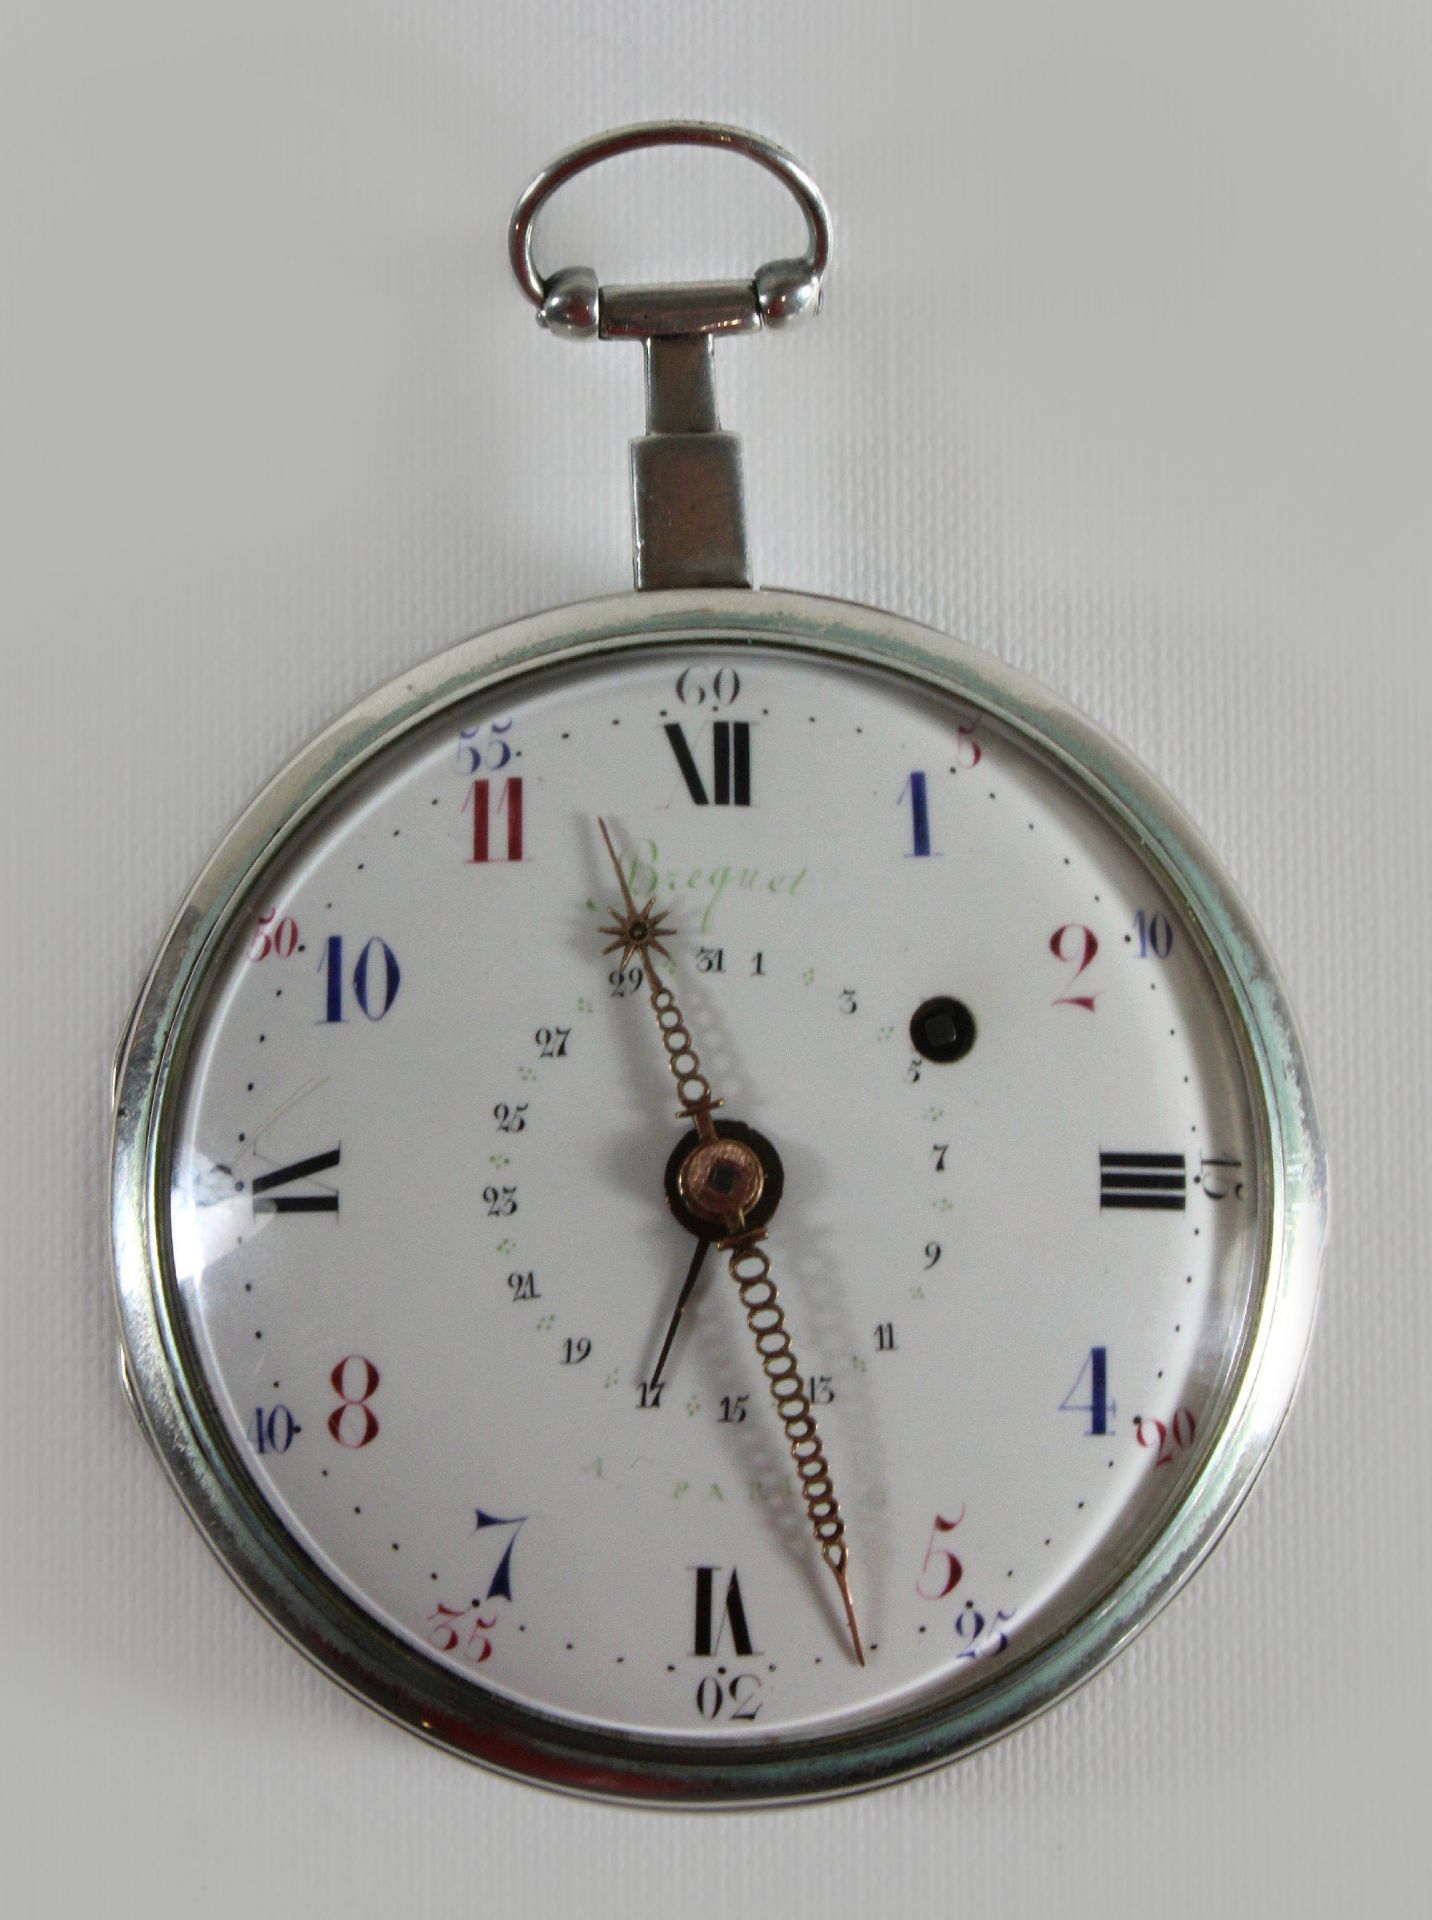 Breguet Schlüsseluhr, um 1800, Frankreich, Silber, Uhrwerk bez. Breguet a Paris, Gehäuse-Nr.: 5946,